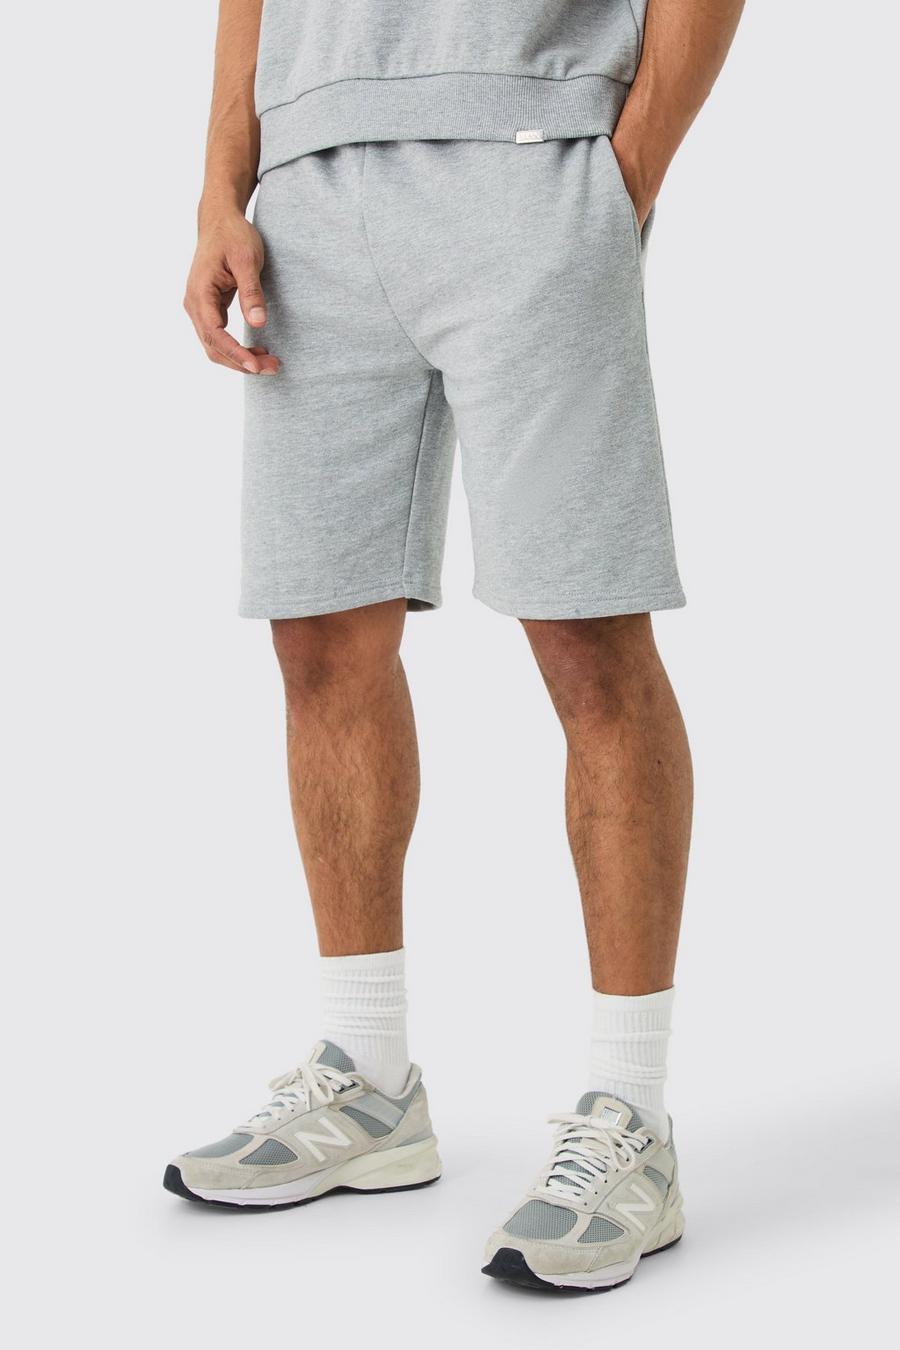 Lockere mittellange Shorts, Grey marl